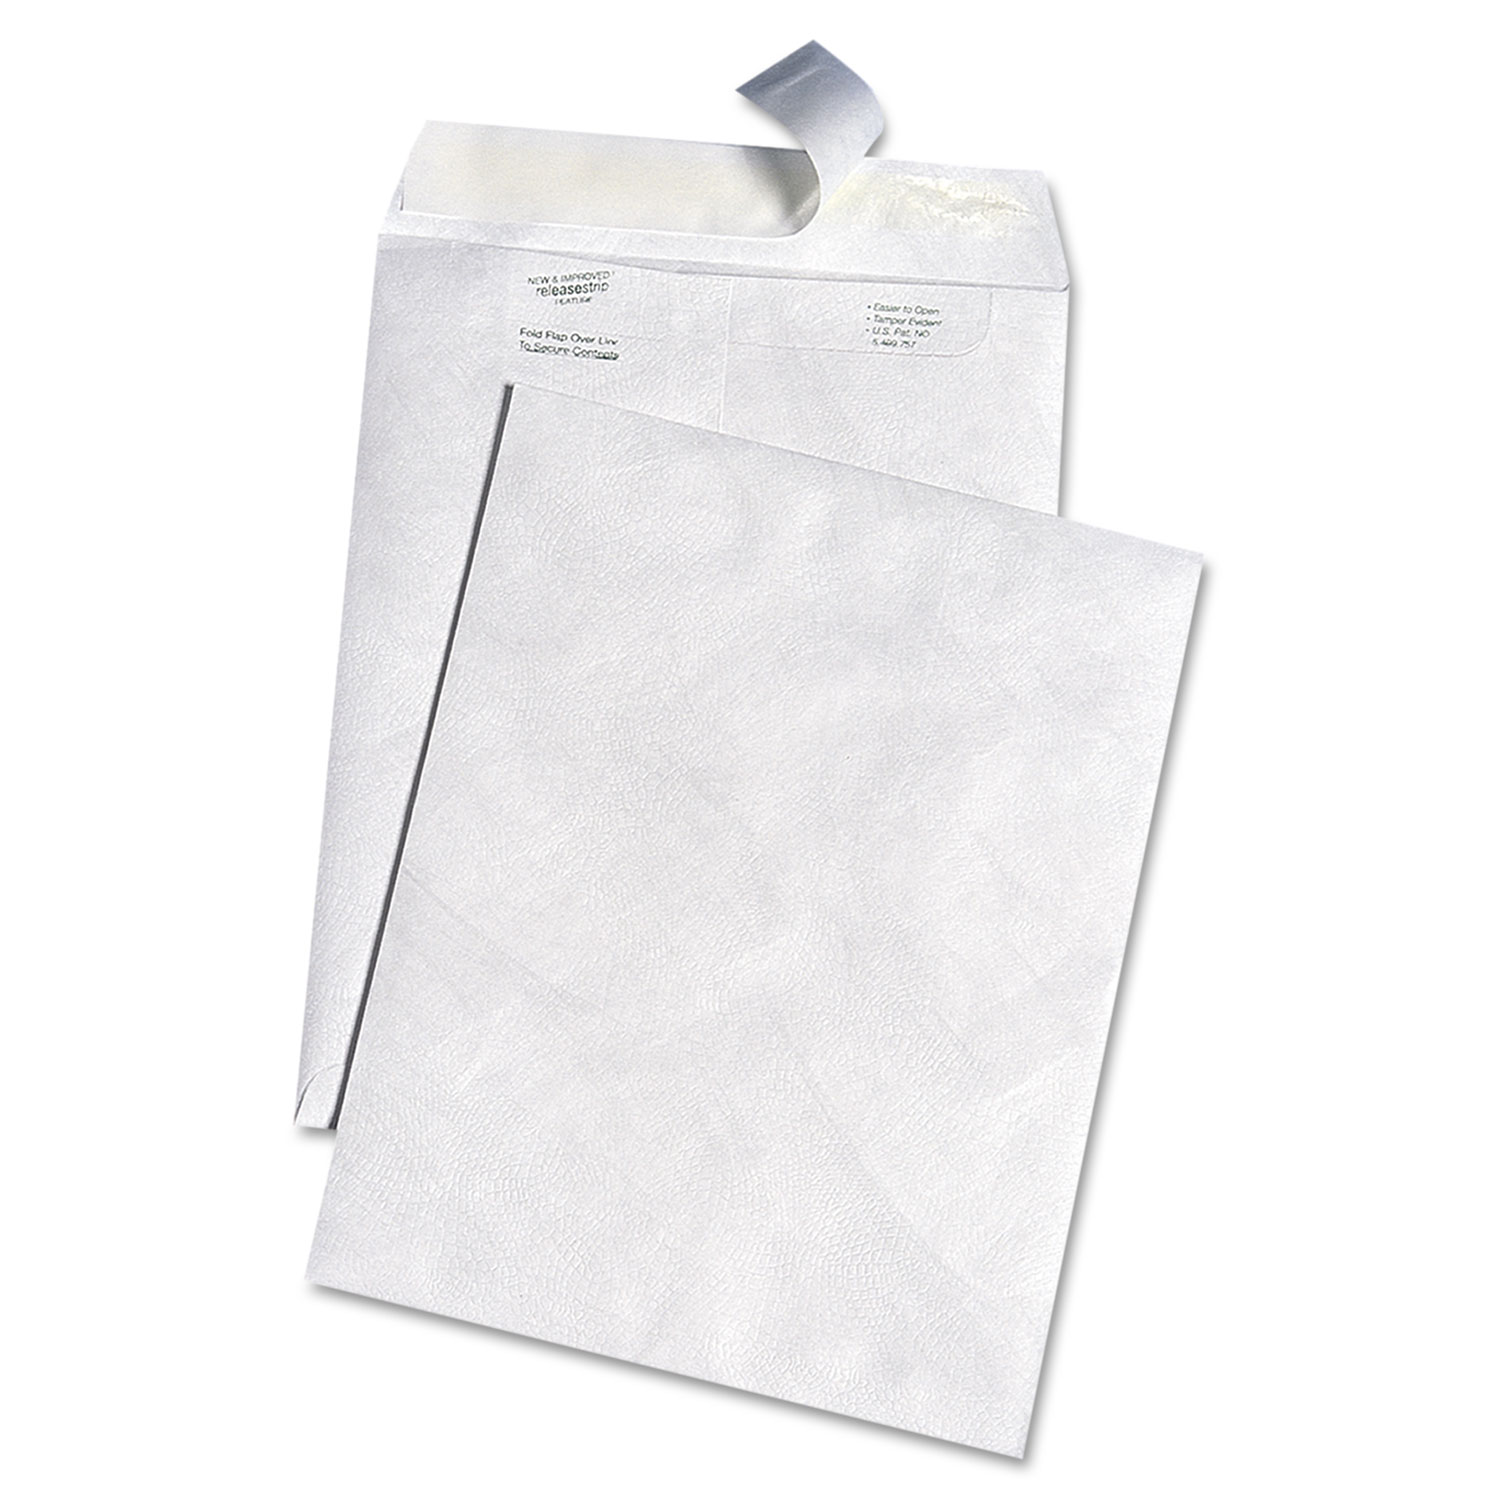  Survivor QUAR3140 White Leather Envelopes of DuPont Tyvek, #13 1/2, Cheese Blade Flap, Self-Adhesive Closure, 10 x 13, White, 100/Box (QUAR3140) 